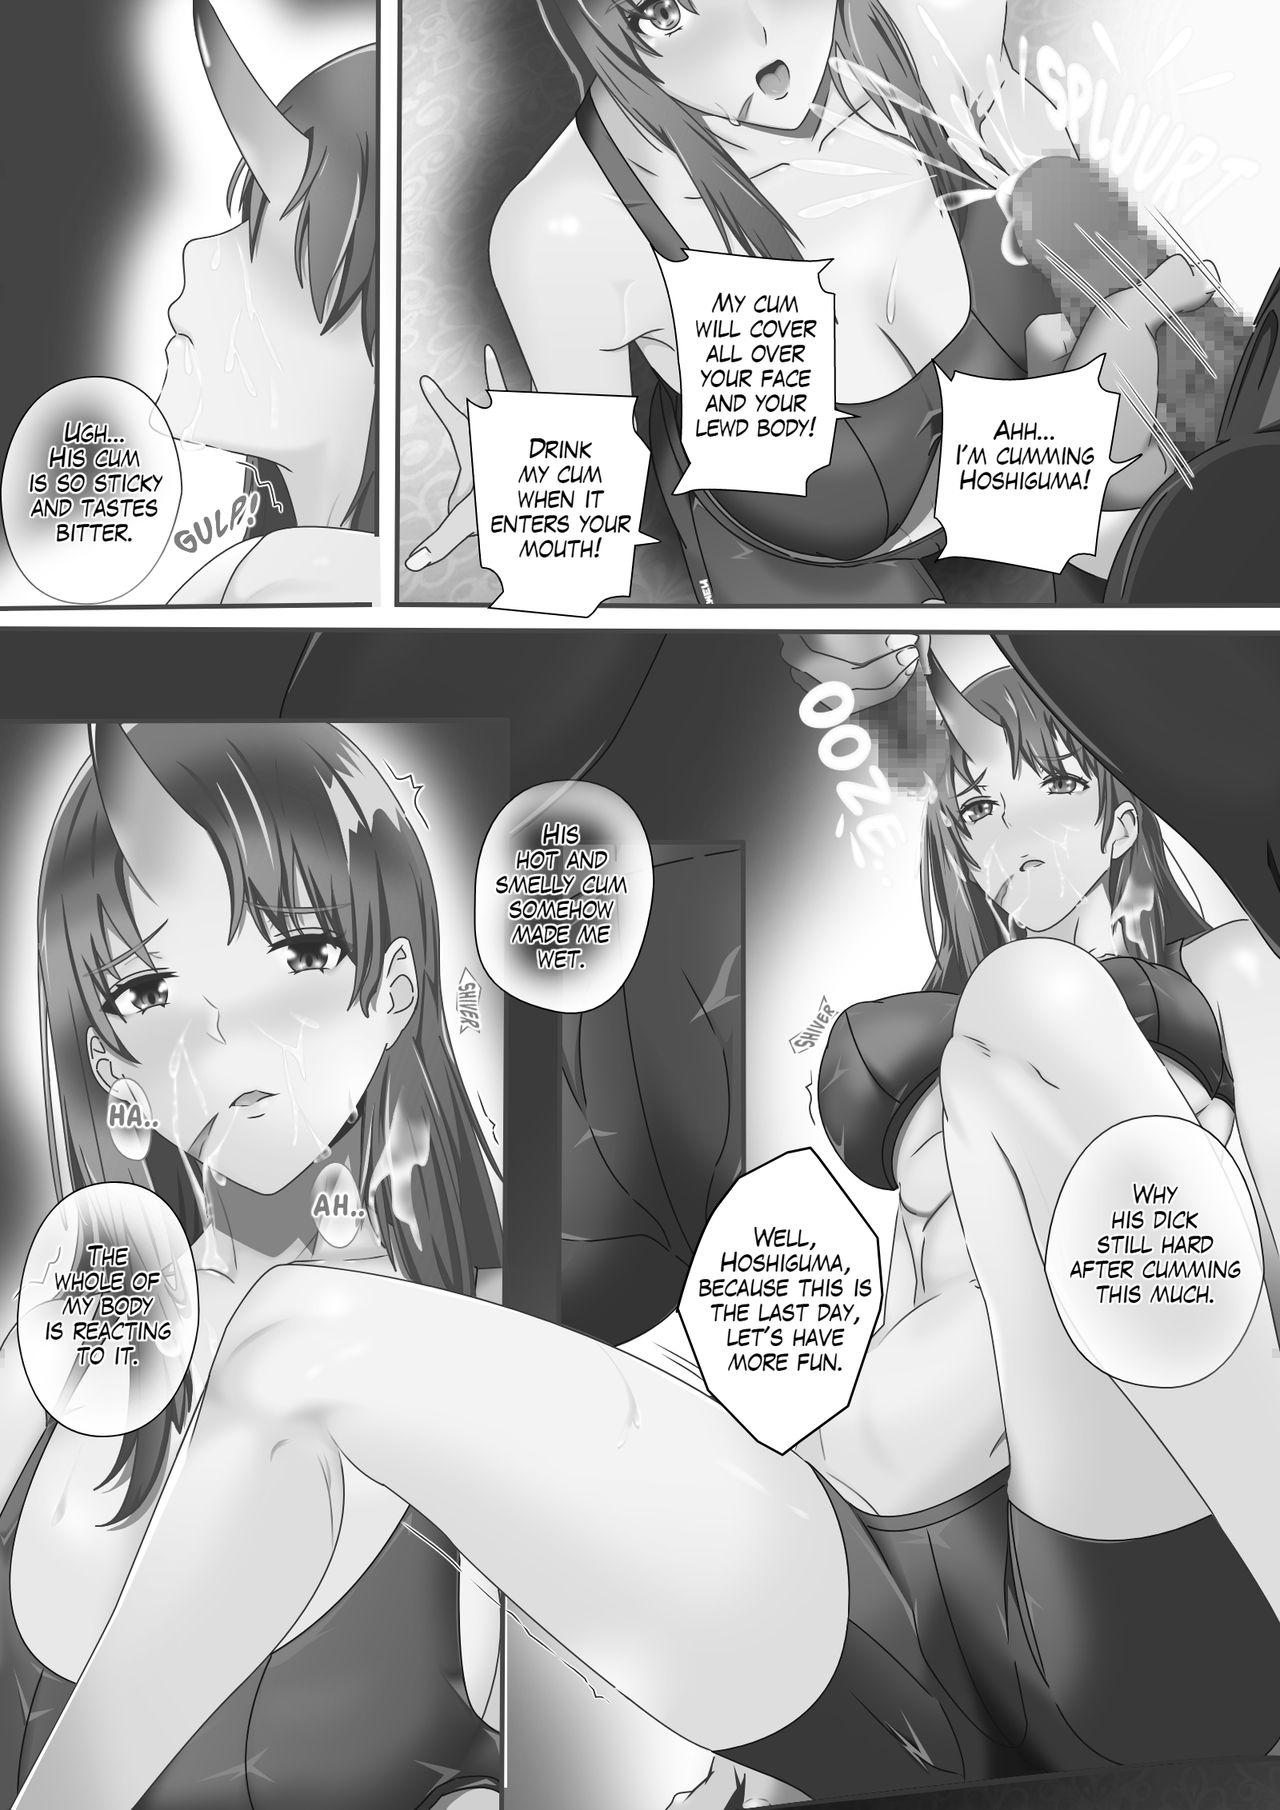 Kissing Hoshiguma's Secret Contract - Arknights Fantasy - Page 3